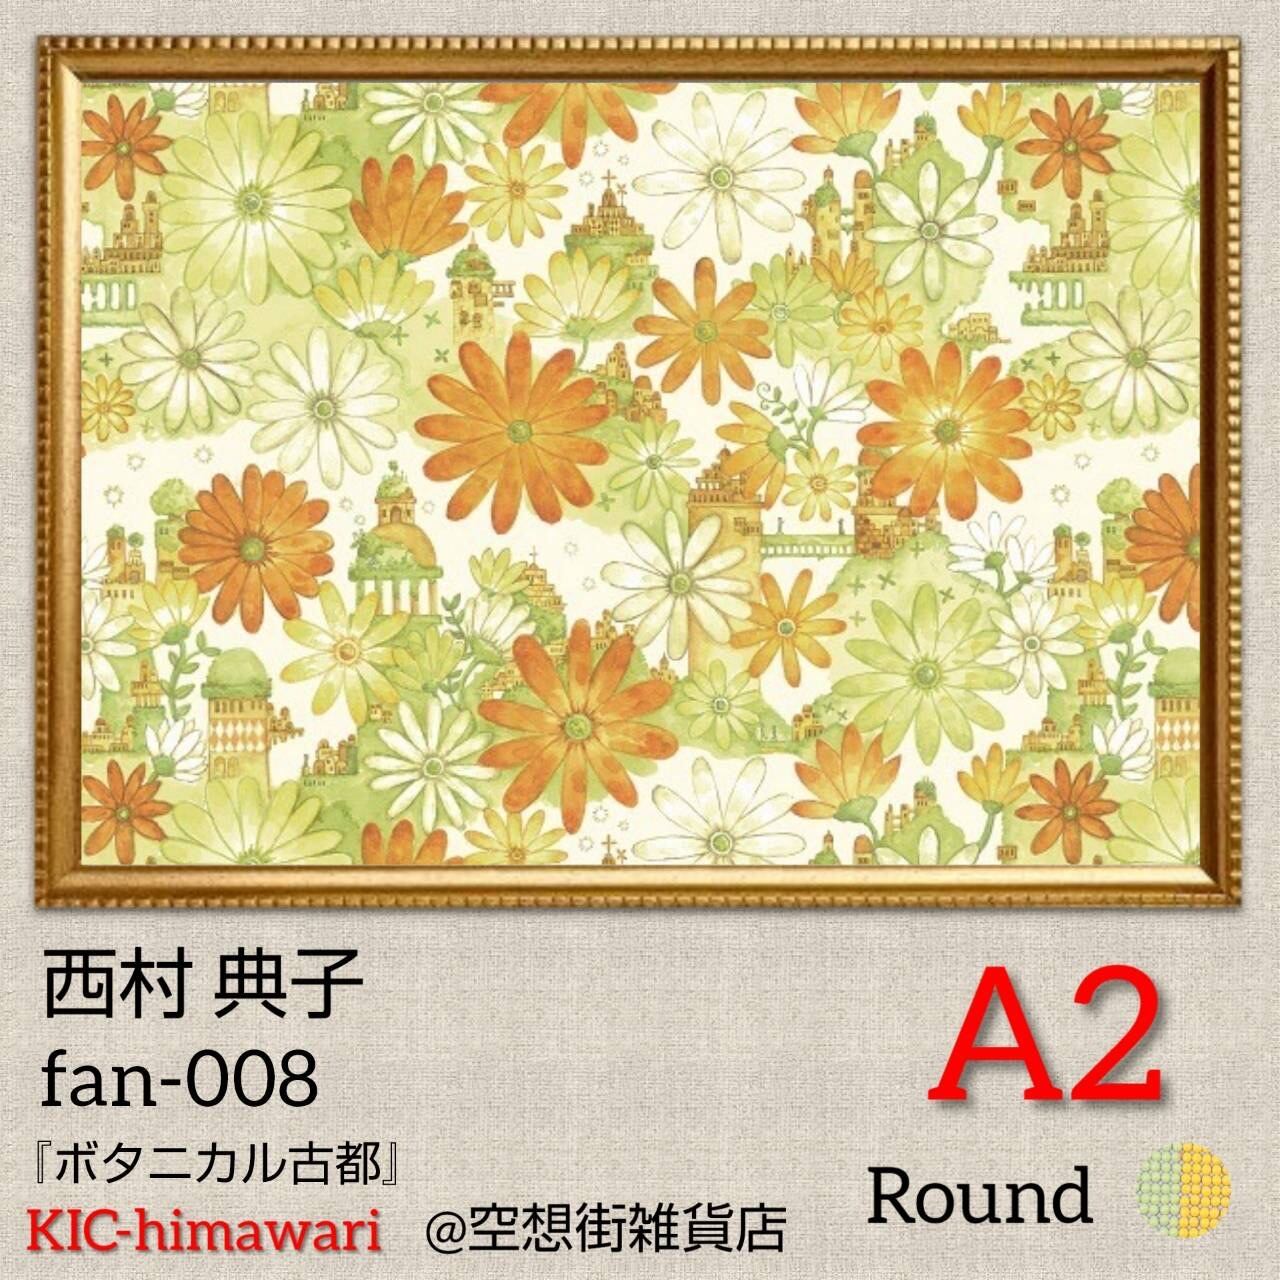 A2サイズ 丸型ビーズ【fan-008】フルダイヤモンドアート